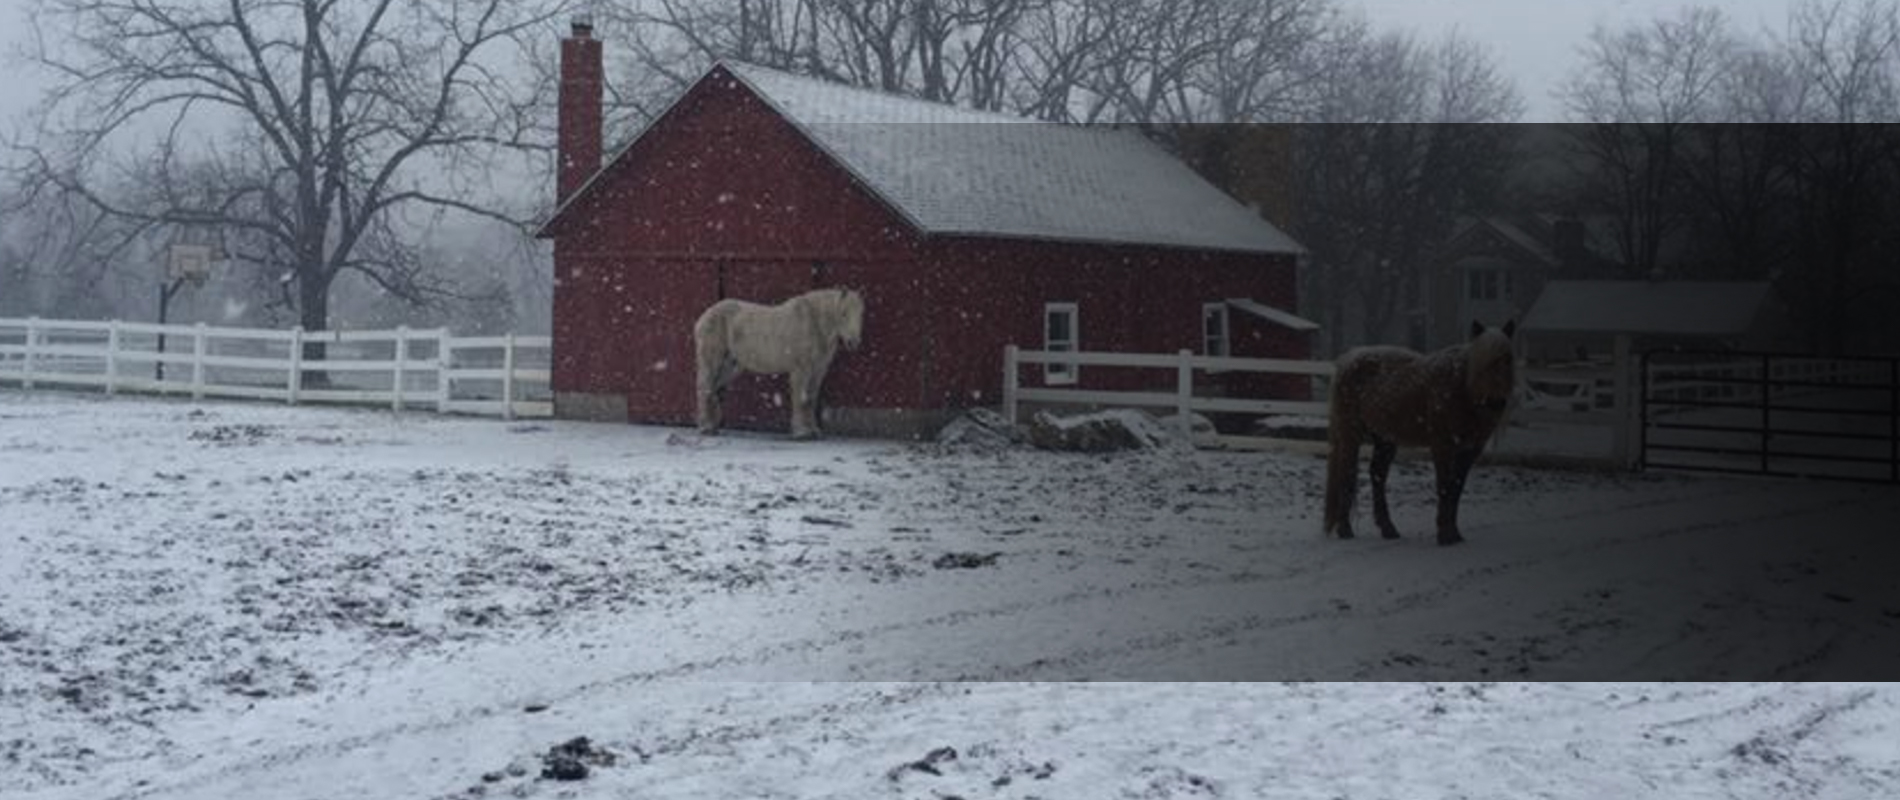 Snowy Farm Background